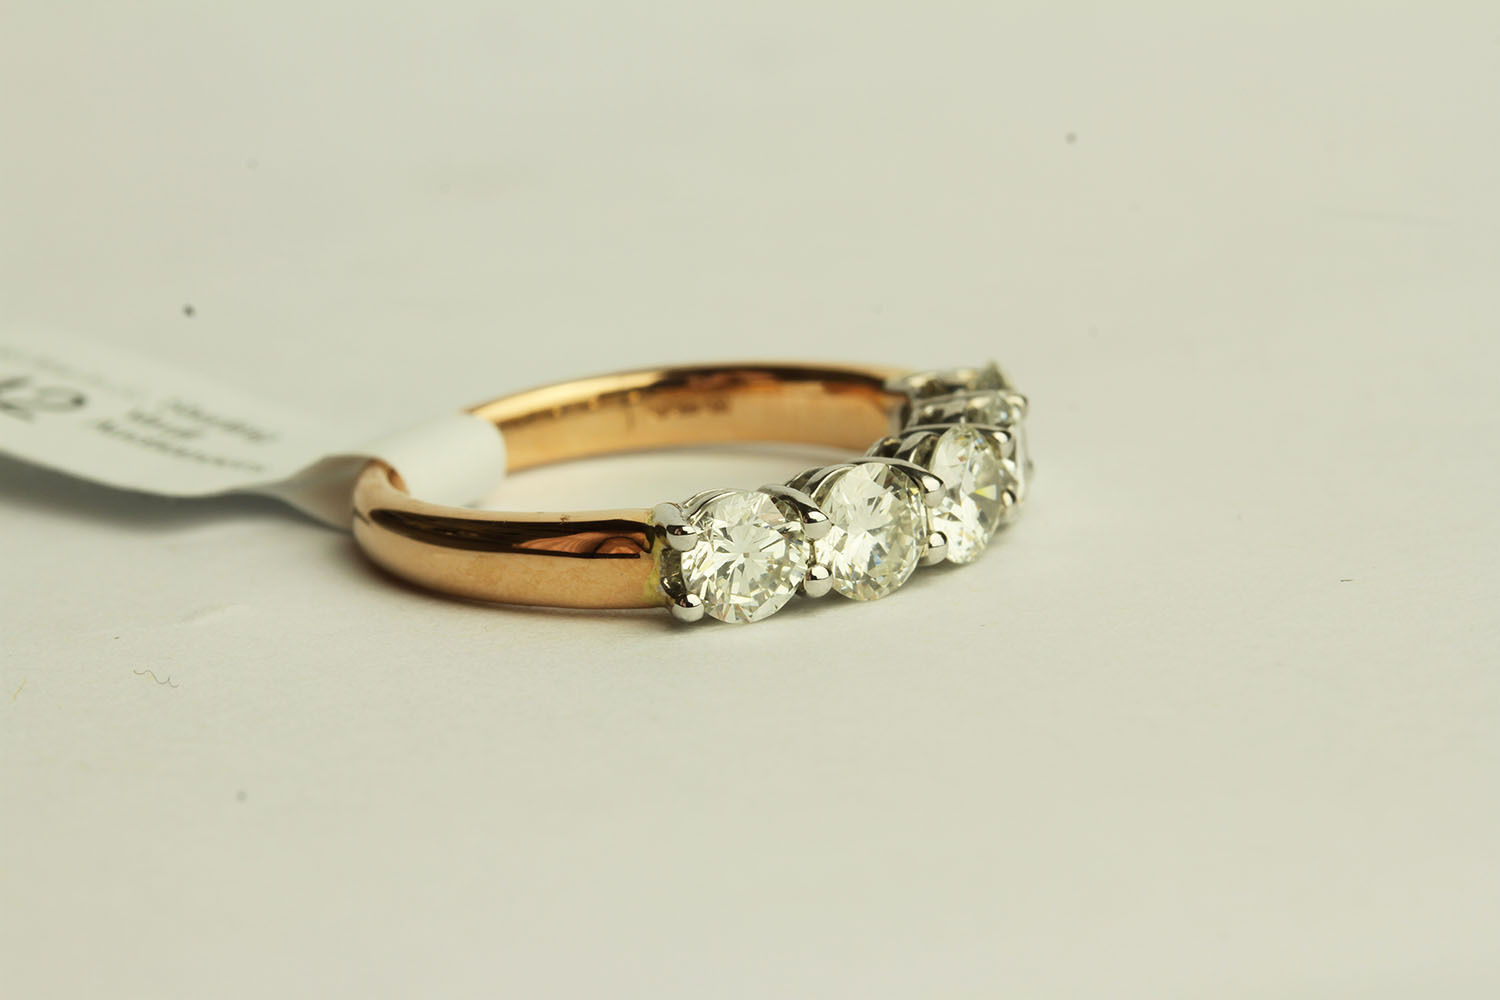 5 Stone Diamond Ring, set with 5 round brilliant cut diamonds - Image 2 of 3